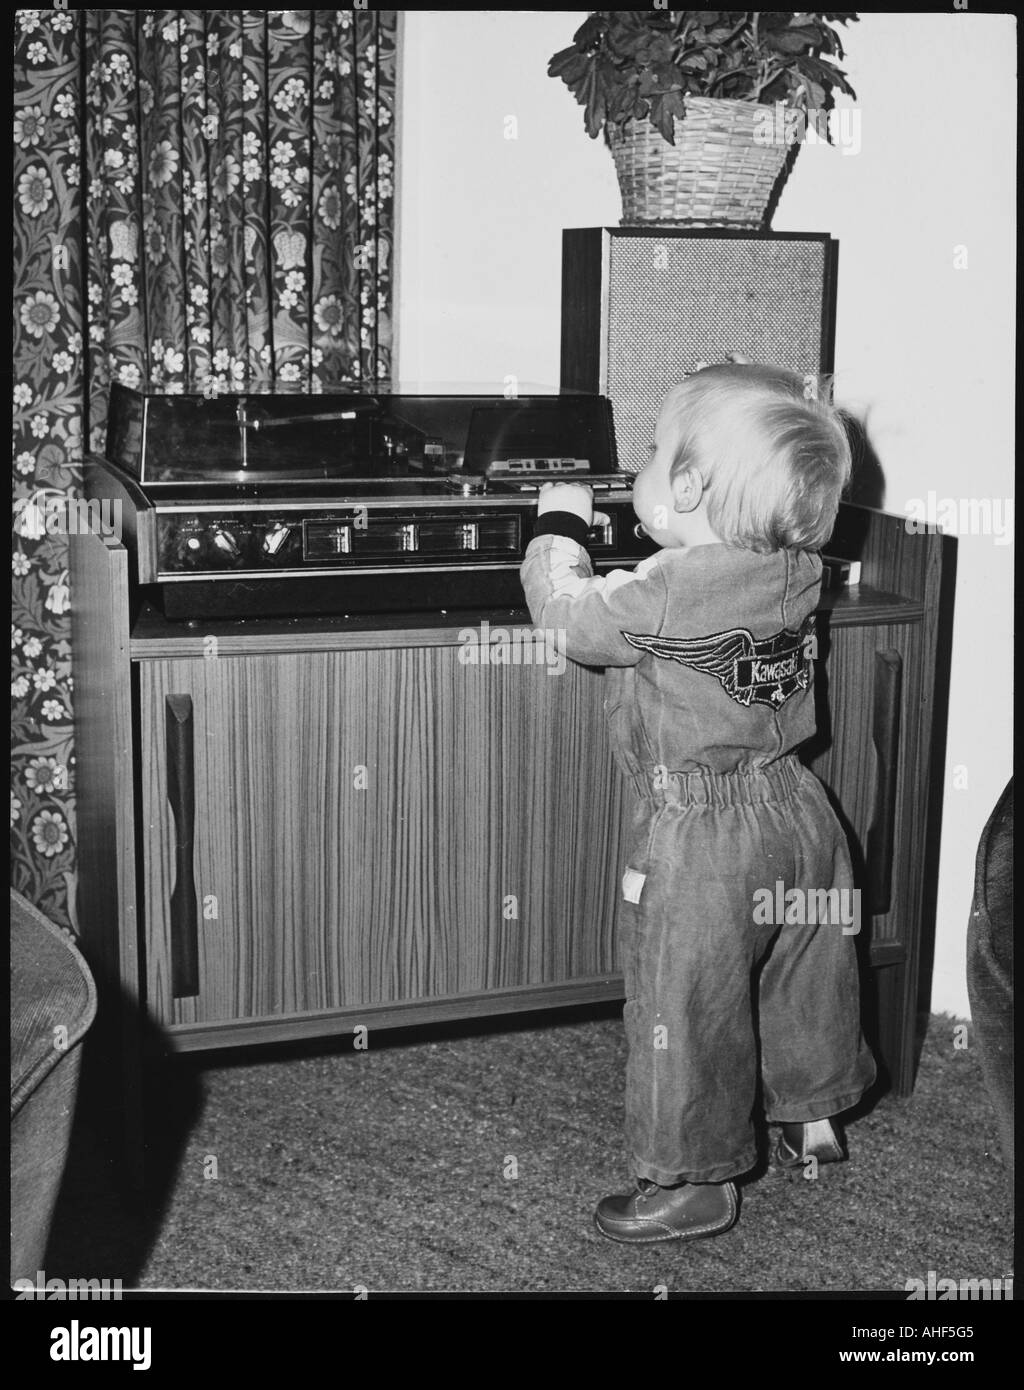 Baby And Radiogram Stock Photo